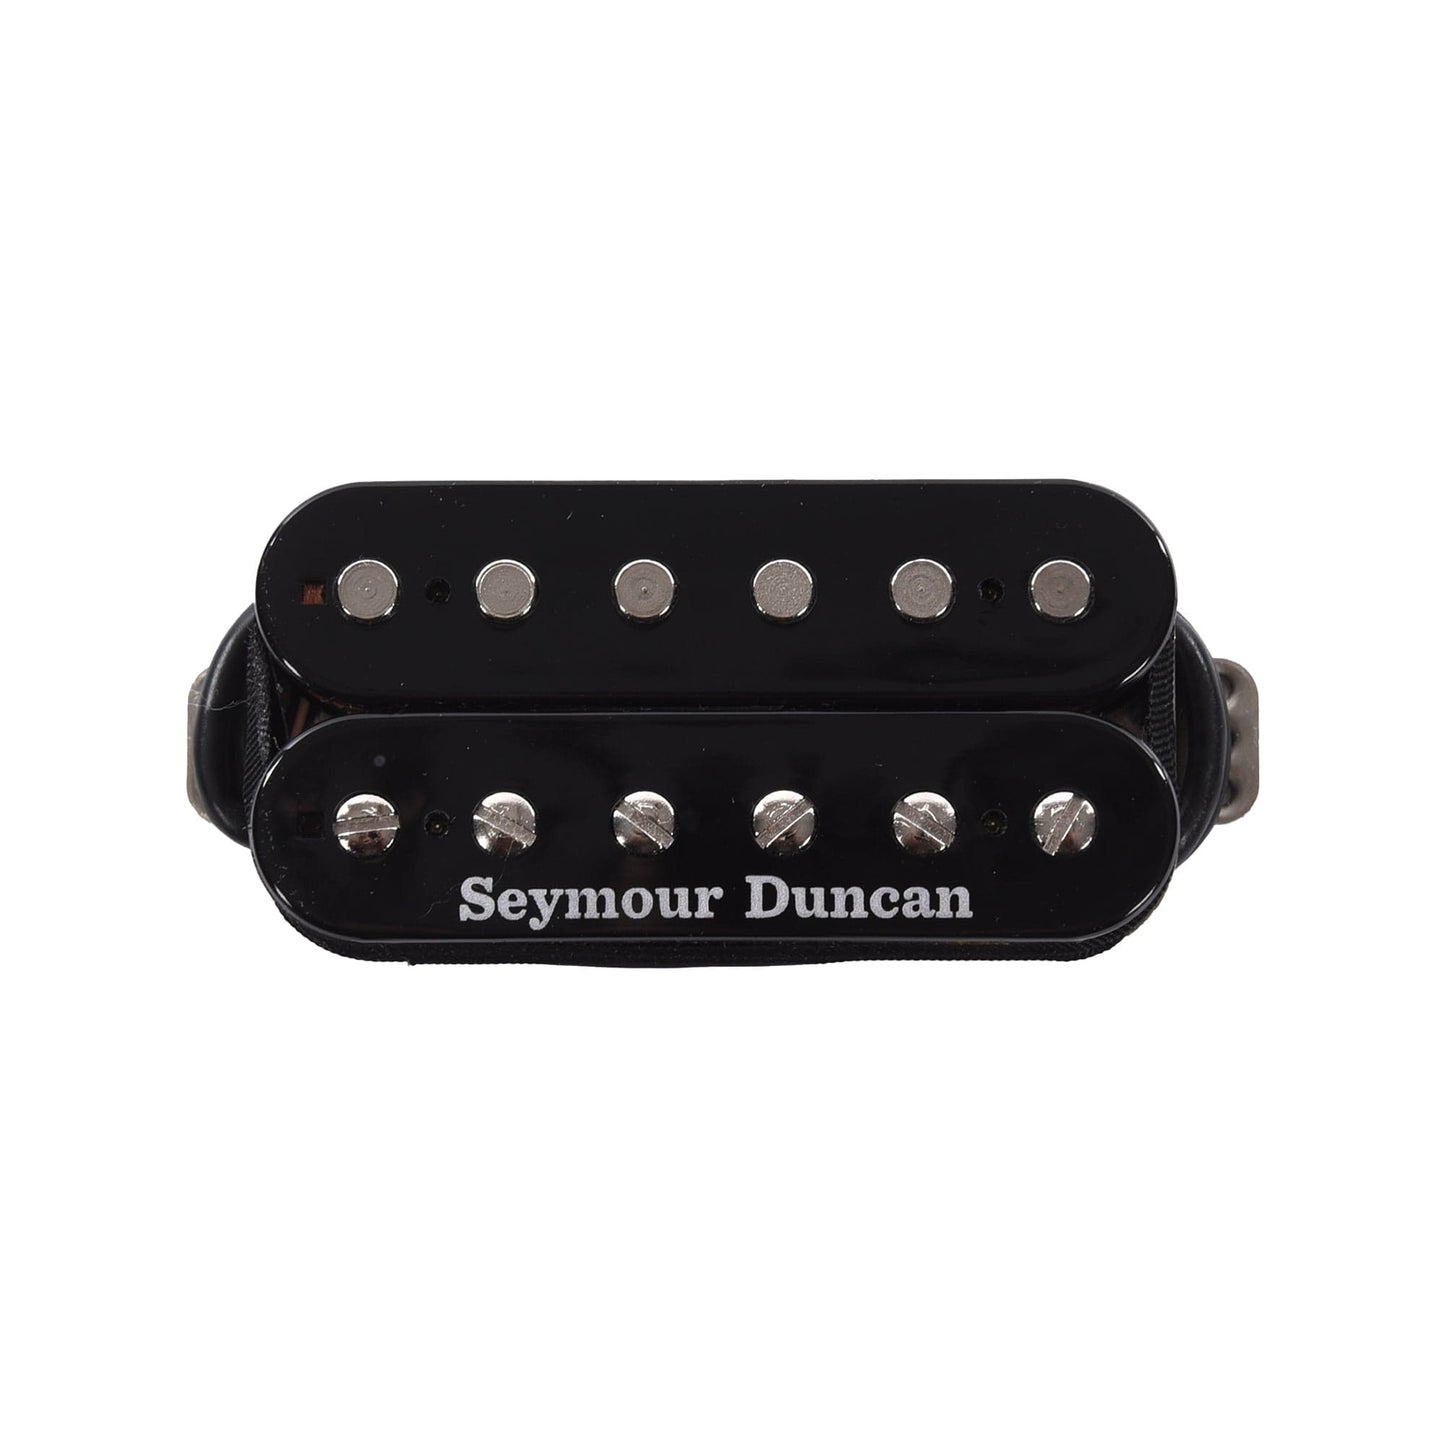 Seymour Duncan TB-16 59 Custom Hybrid Pickup Black Cover Parts / Guitar Pickups